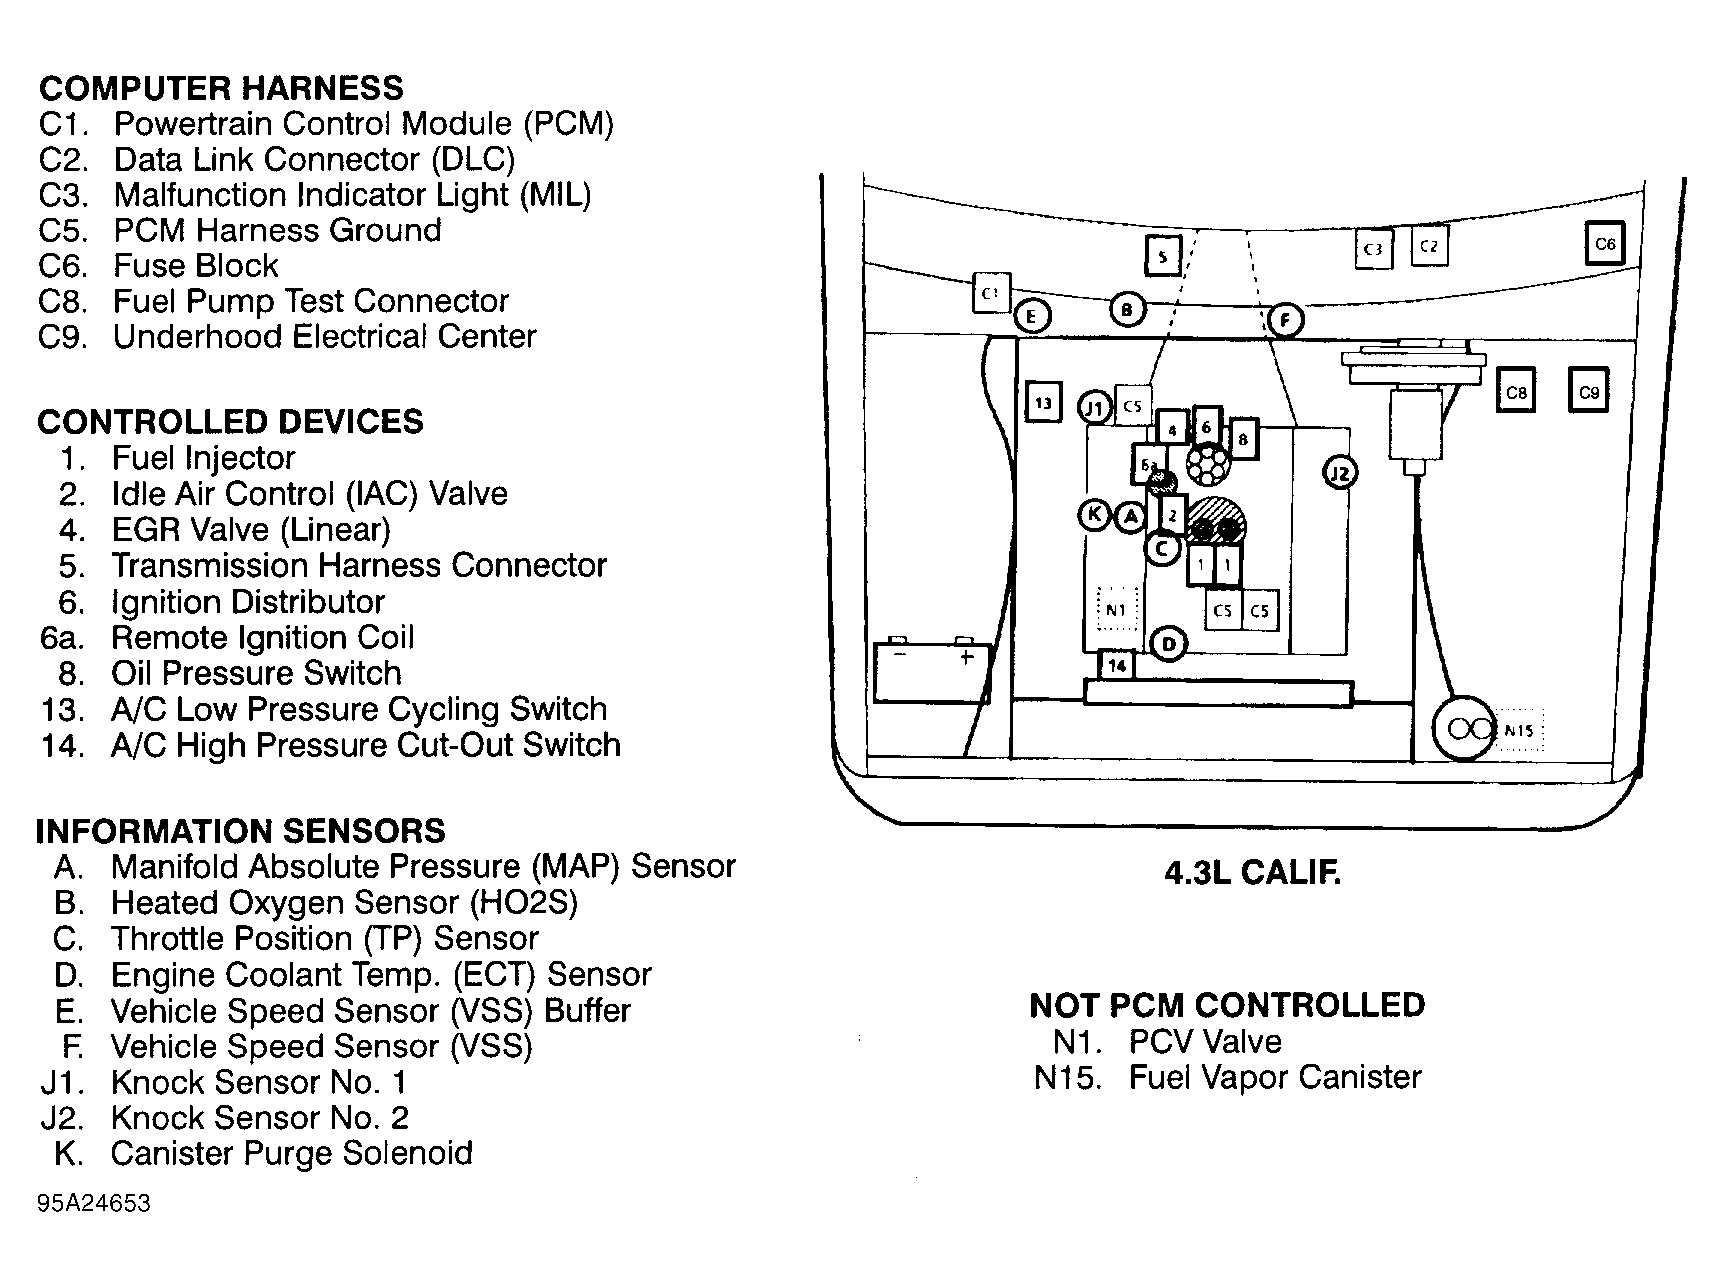 Chevrolet Pickup C3500 1995 - Component Locations -  Engine Compartment (4.3L Calif.)